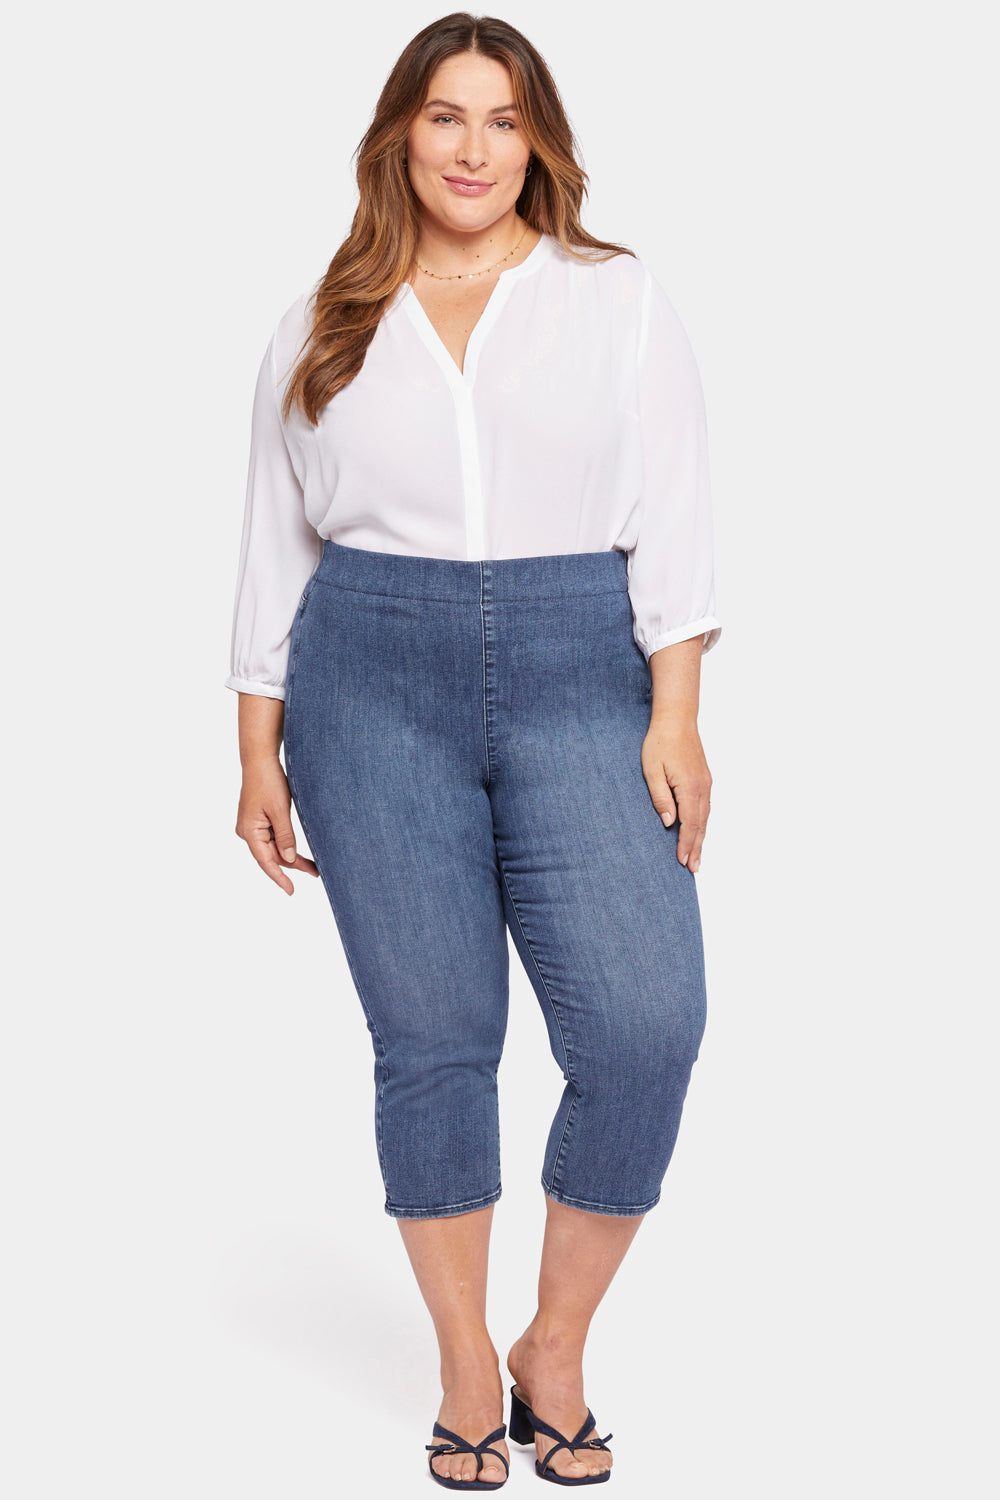 NYDJ Dakota Crop Pull-On Jeans In Plus Size In SpanSpring™ Denim With Side Slits - Caliente